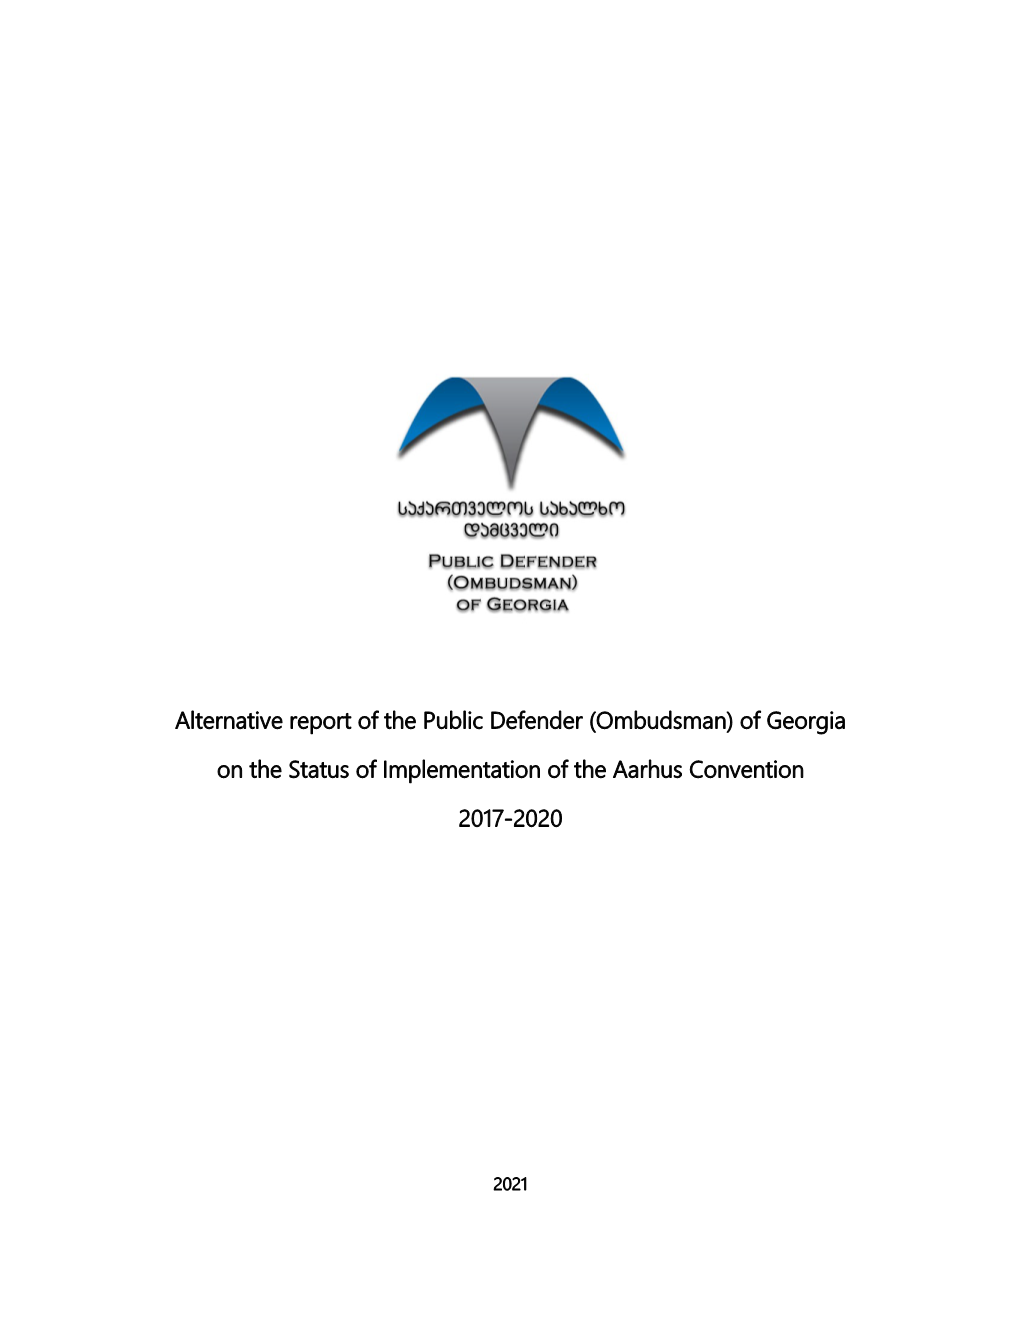 Alternative Report of the Public Defender (Ombudsman) of Georgia